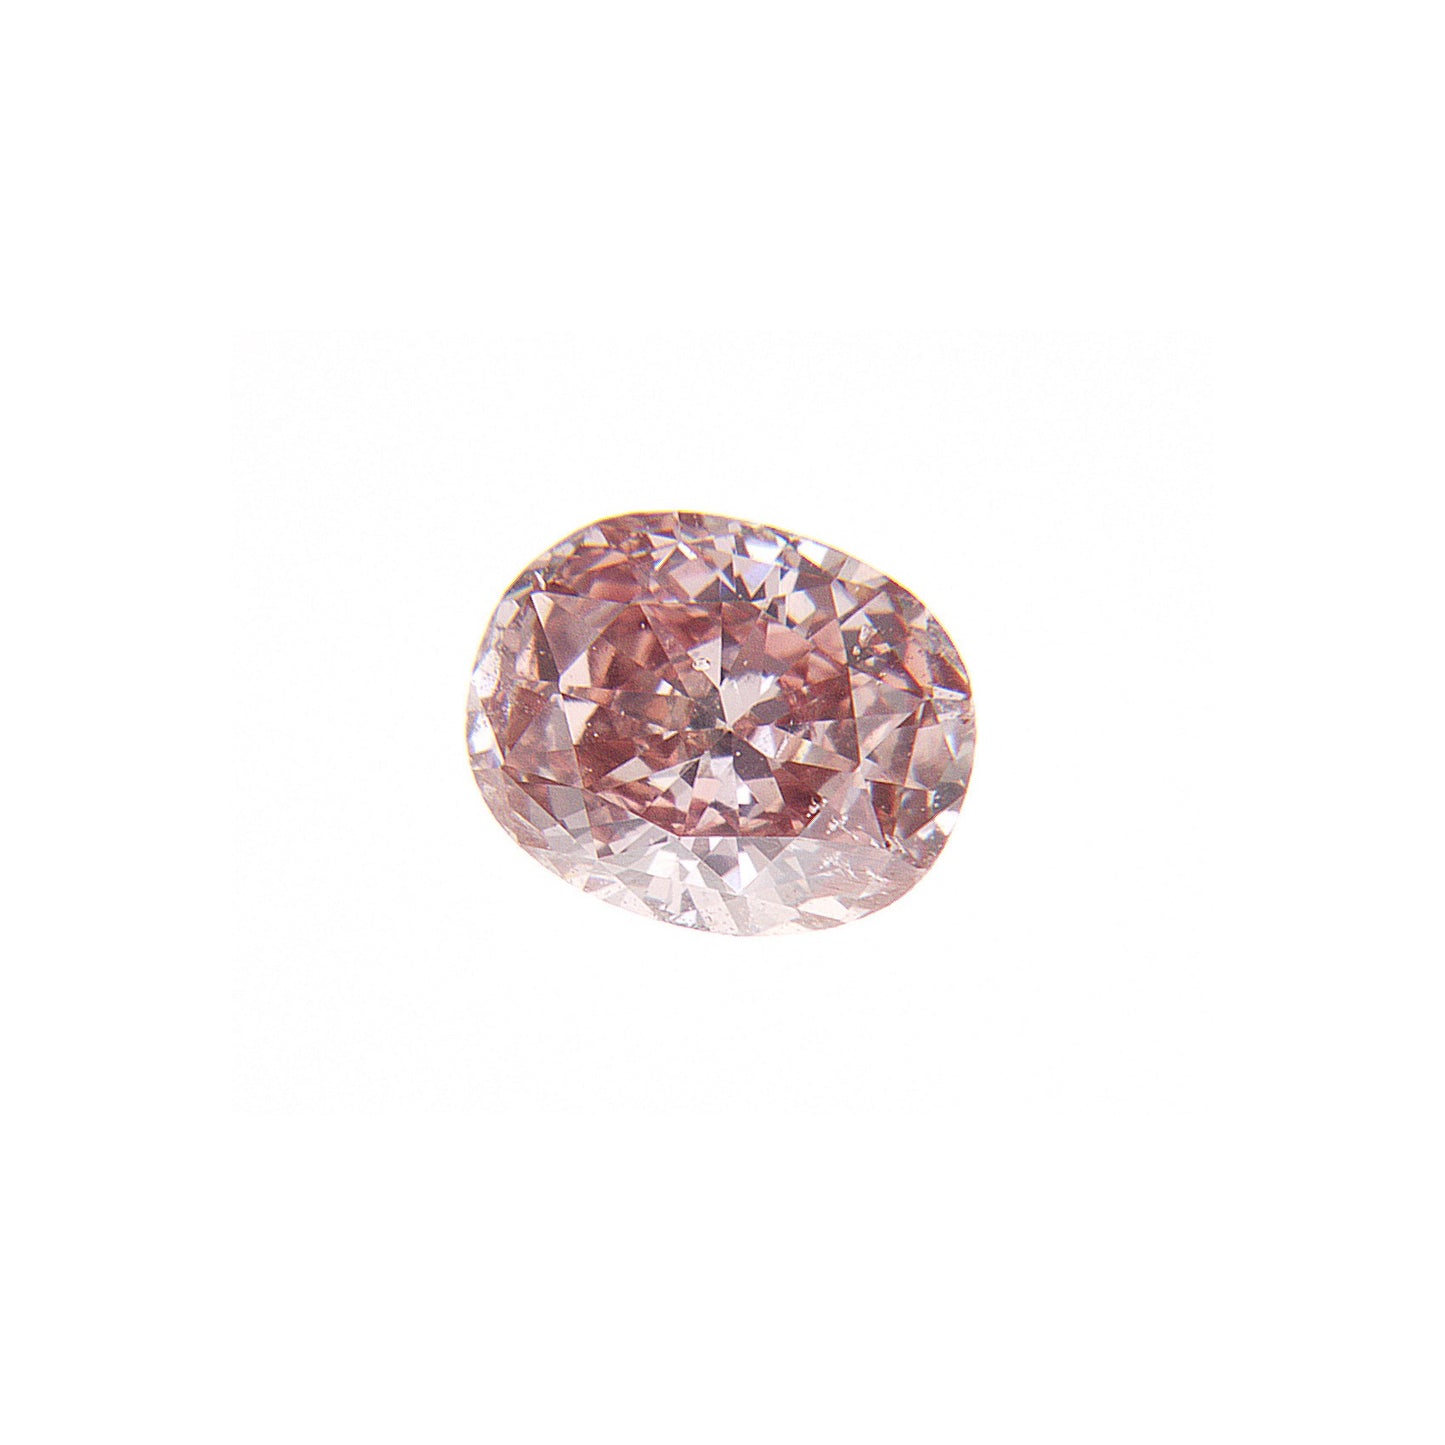 0.21ct Fancy Deep Brownish Orangy Pink, Oval Diamond, SI1 - 4.18 x 3.37 x 2.11mm